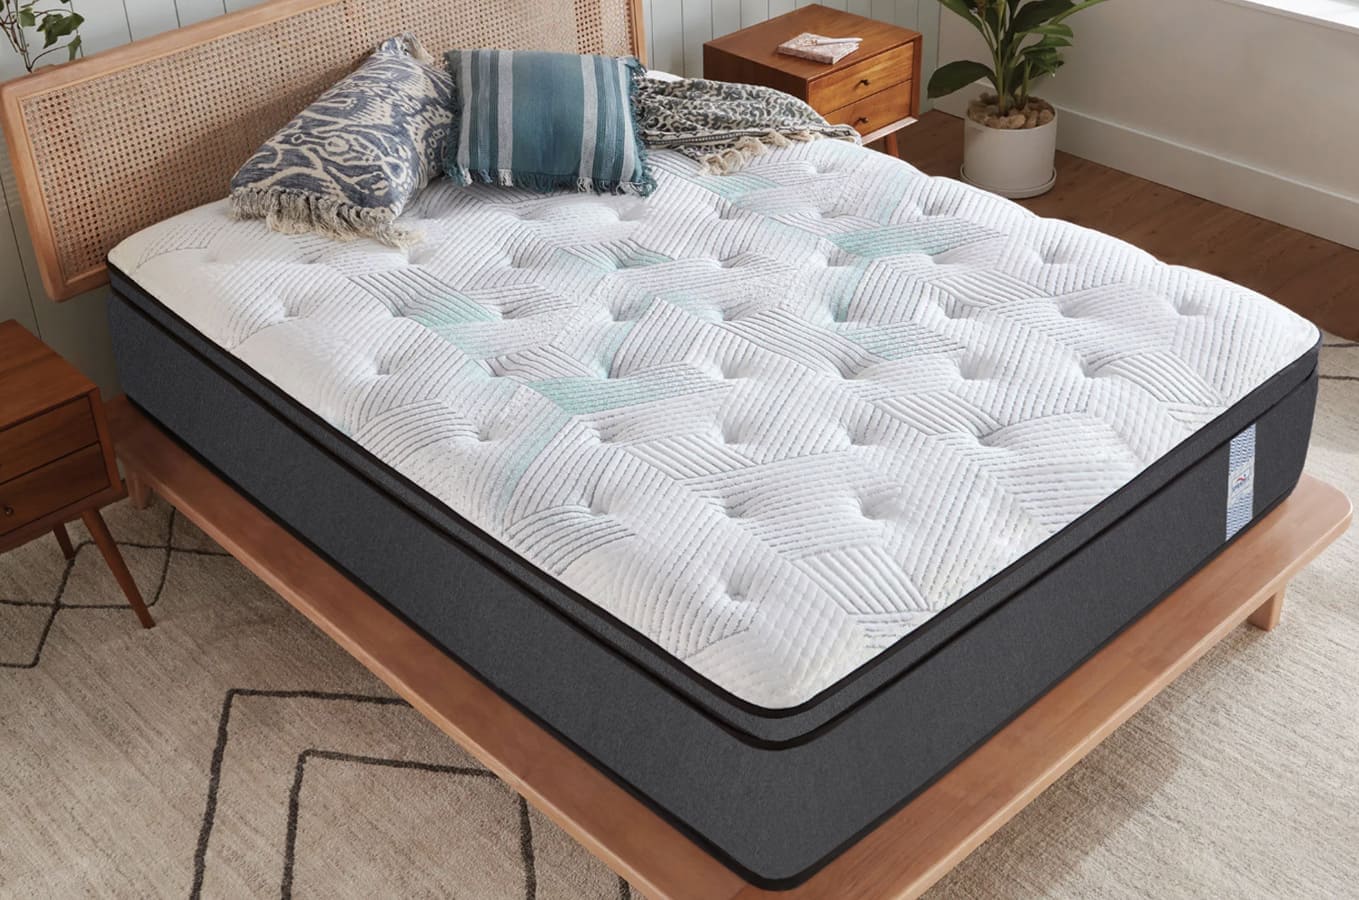 ergopedic latex pocket spring foam mattress review